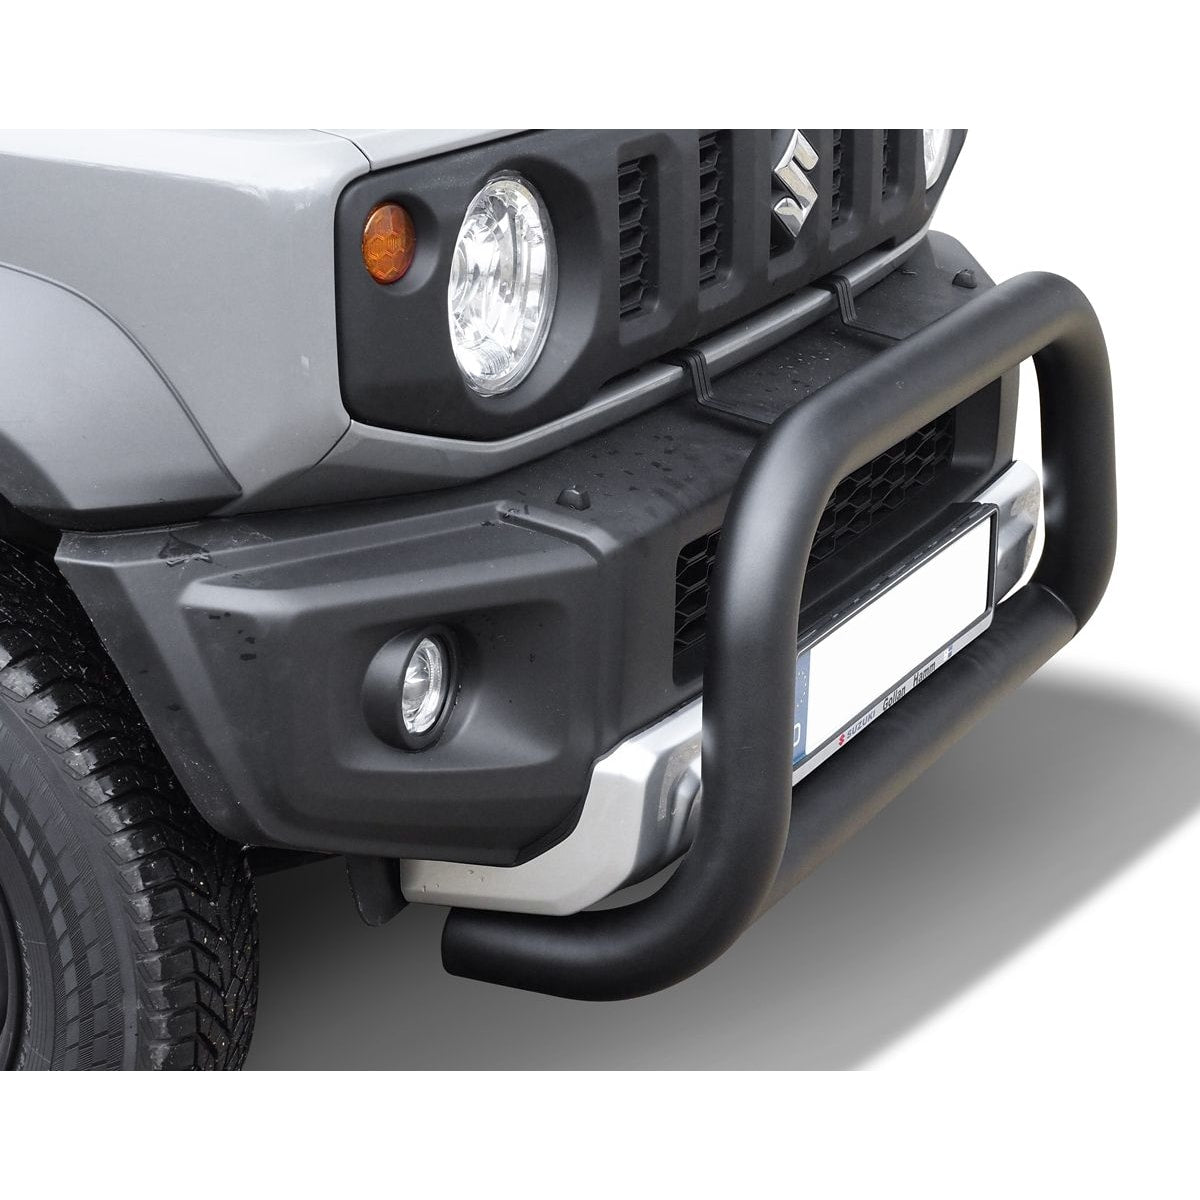 trekvoss - Frontschutzbügel schwarz für Suzuki Jimny GJ